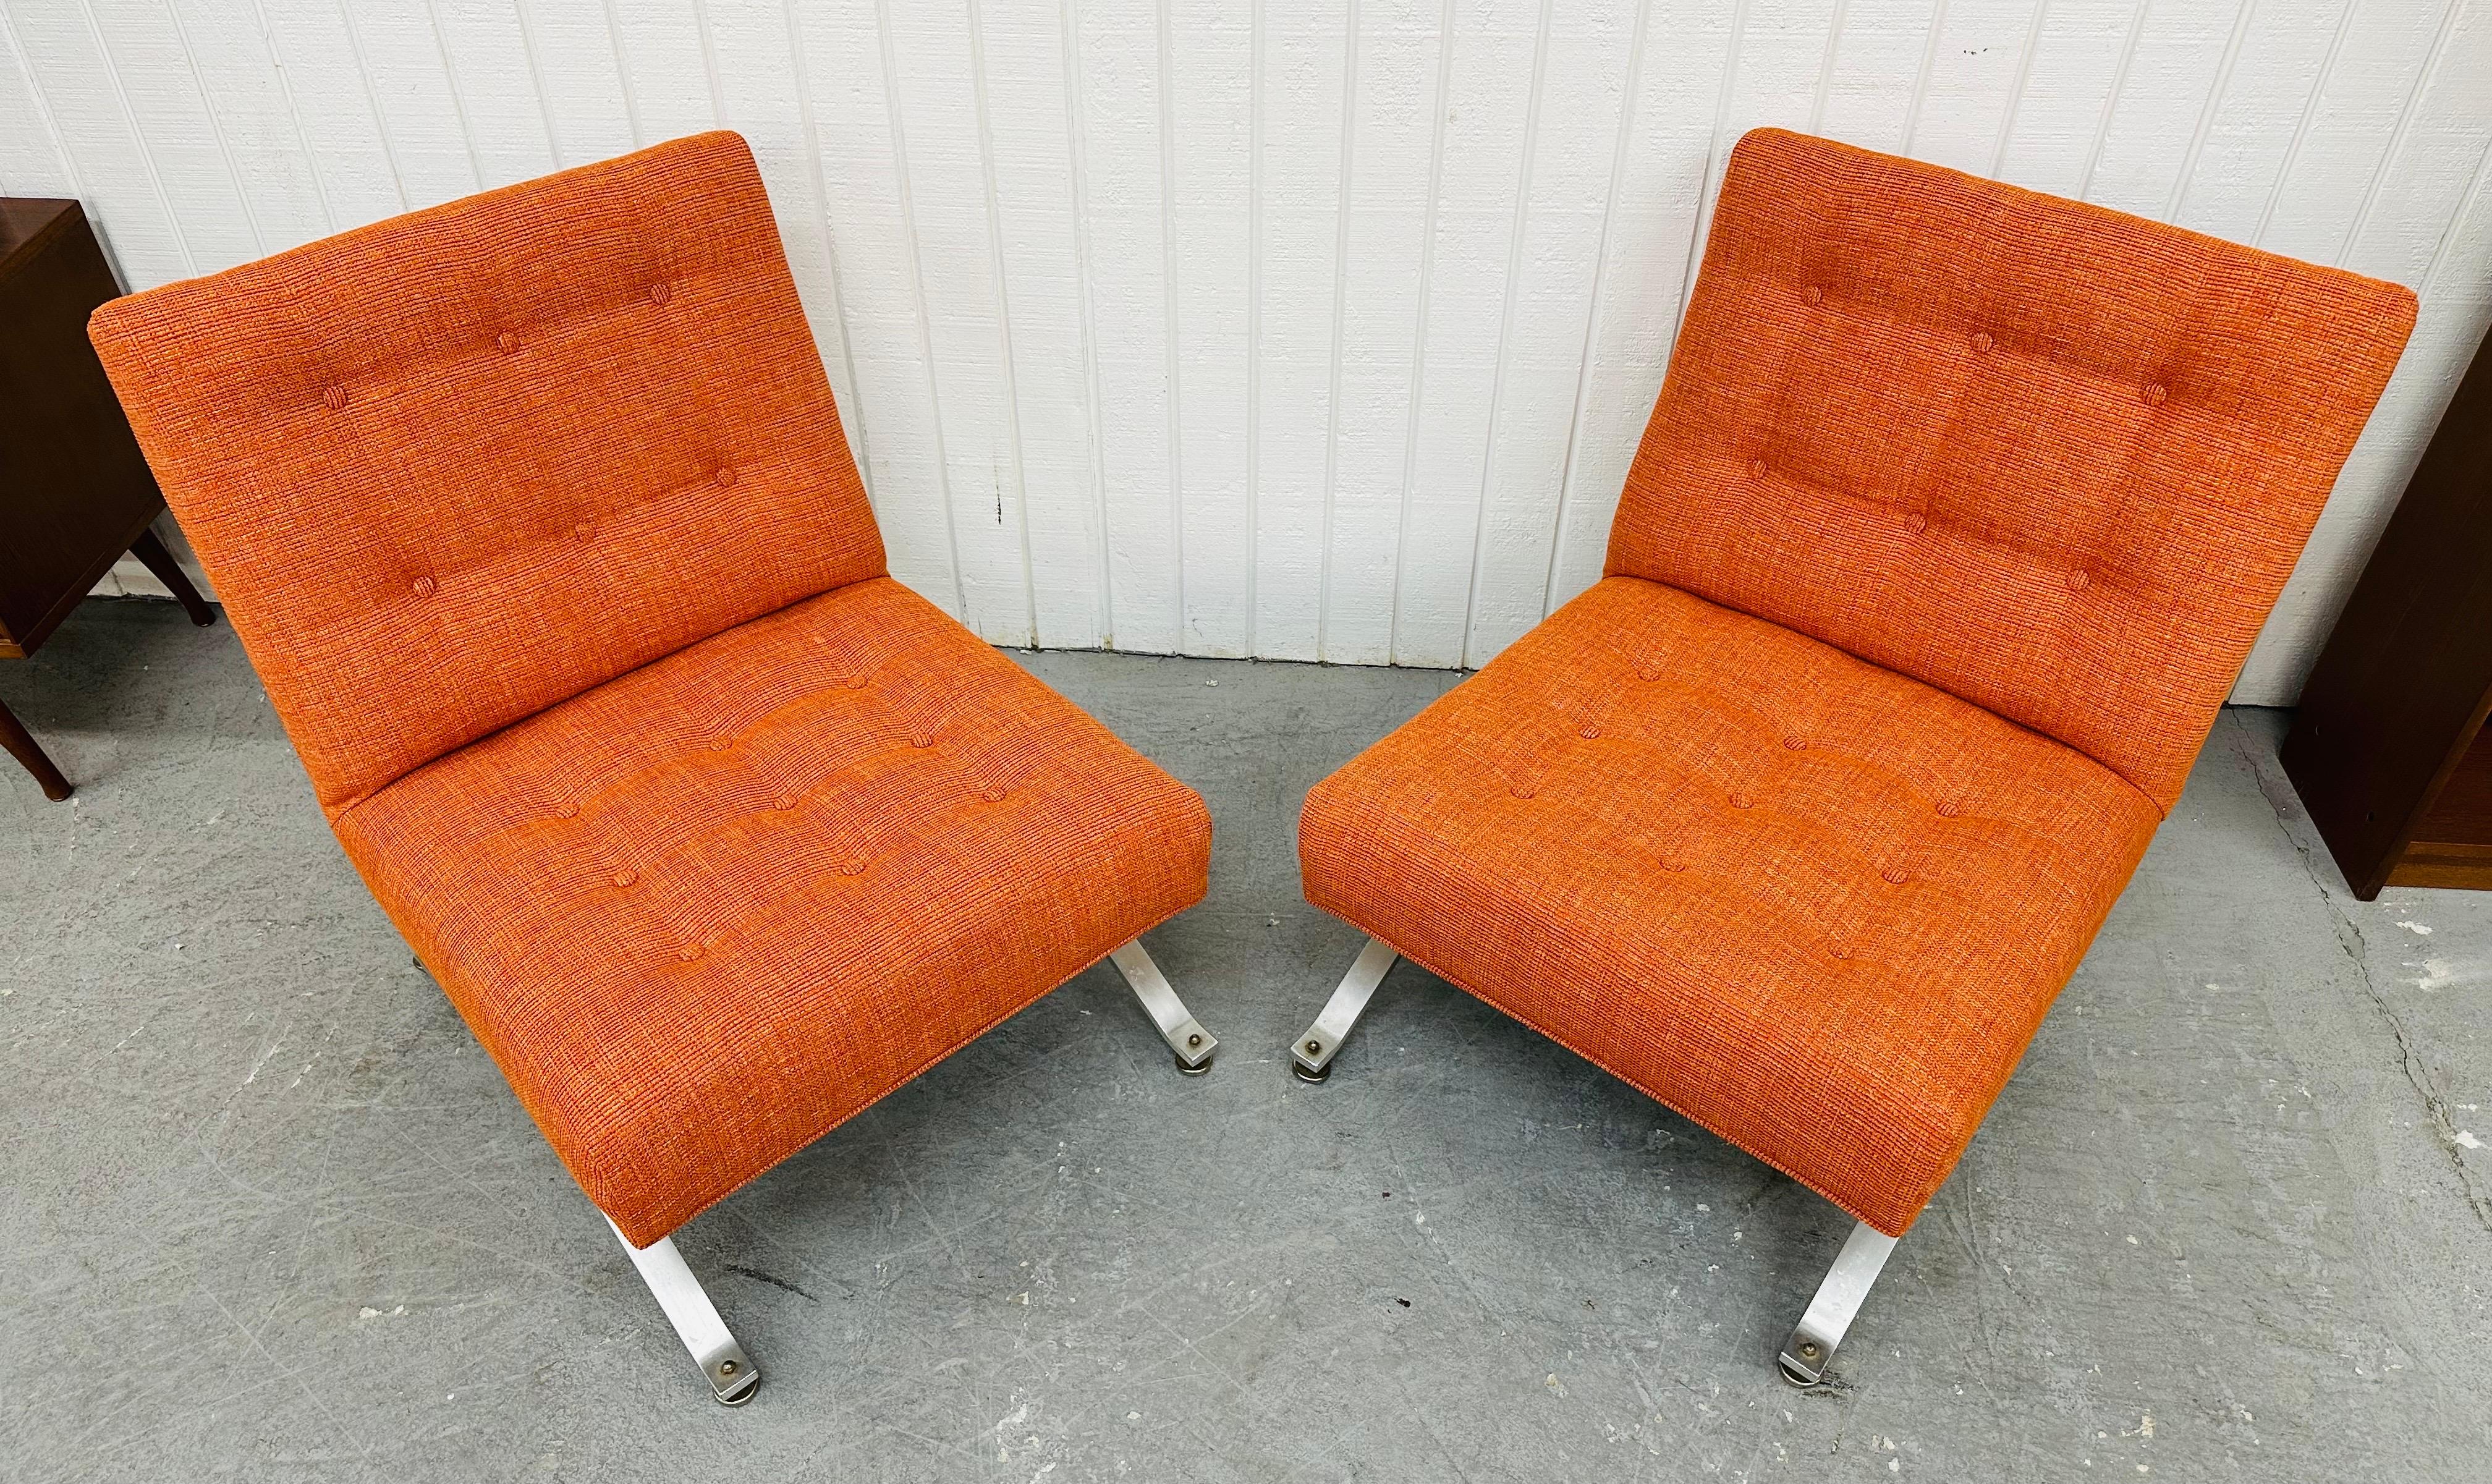 20th Century Mid-Century Modern Orange Slipper Chairs - Set of 2 For Sale